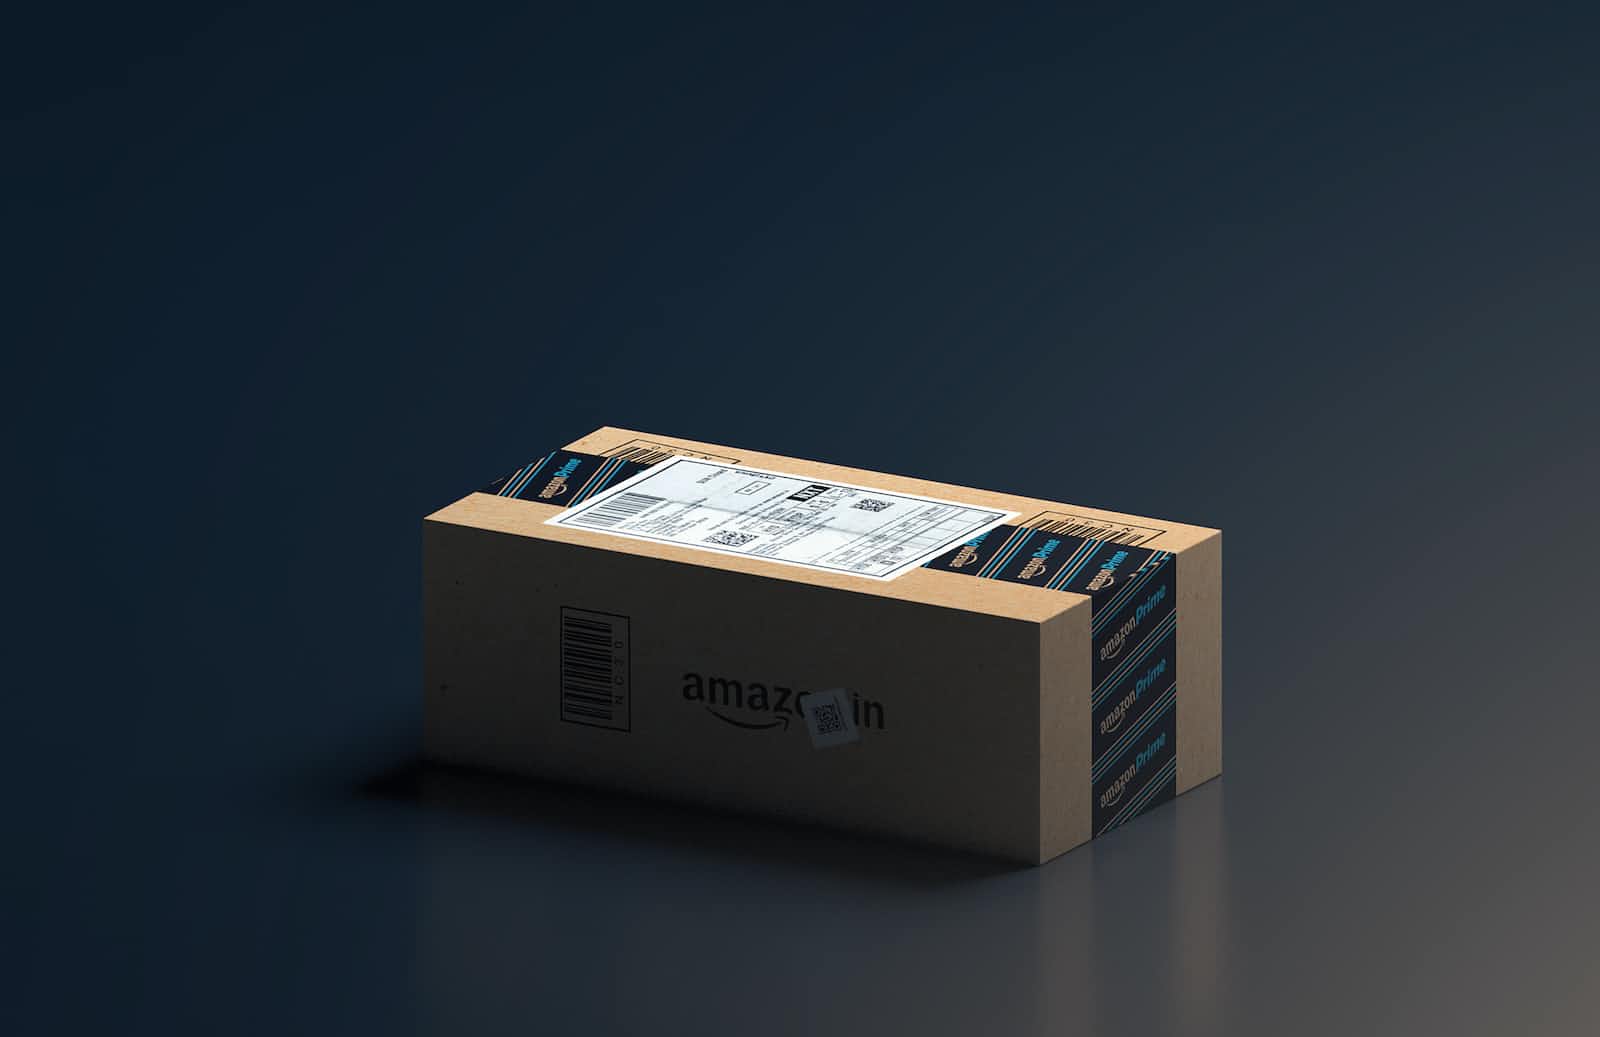 An unopened Amazon shipping box